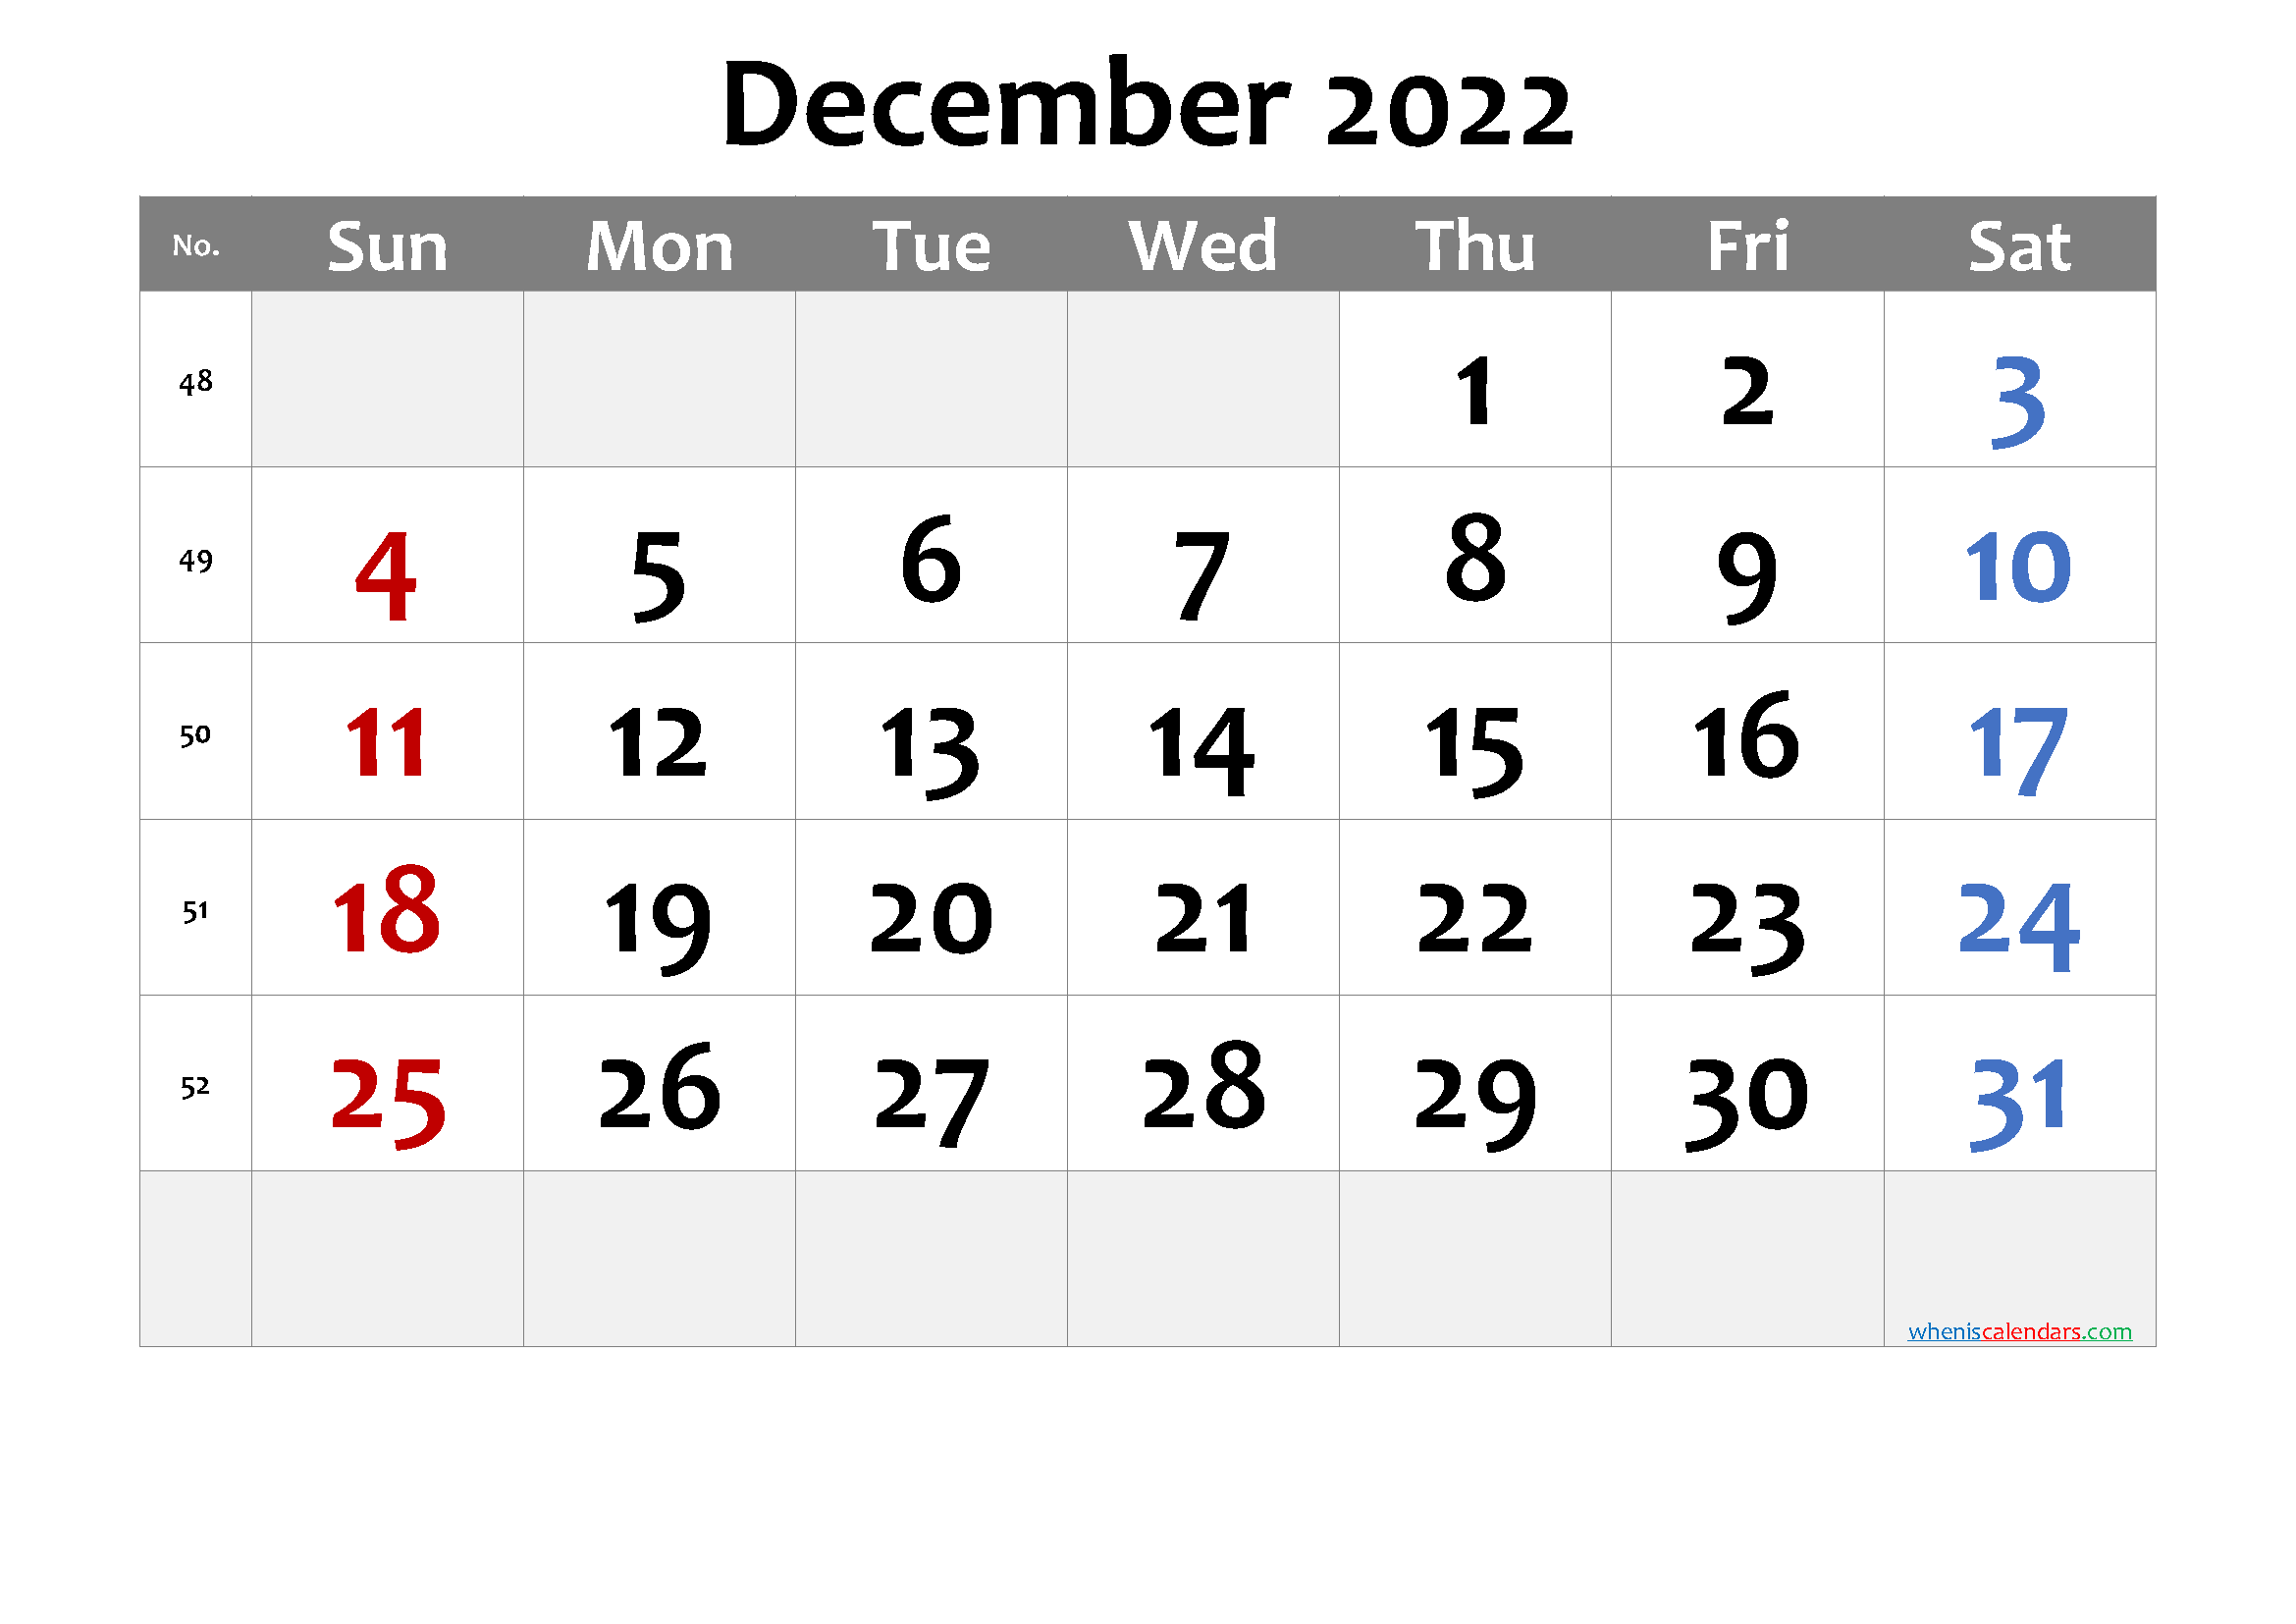 December 2022 Printable Calendar